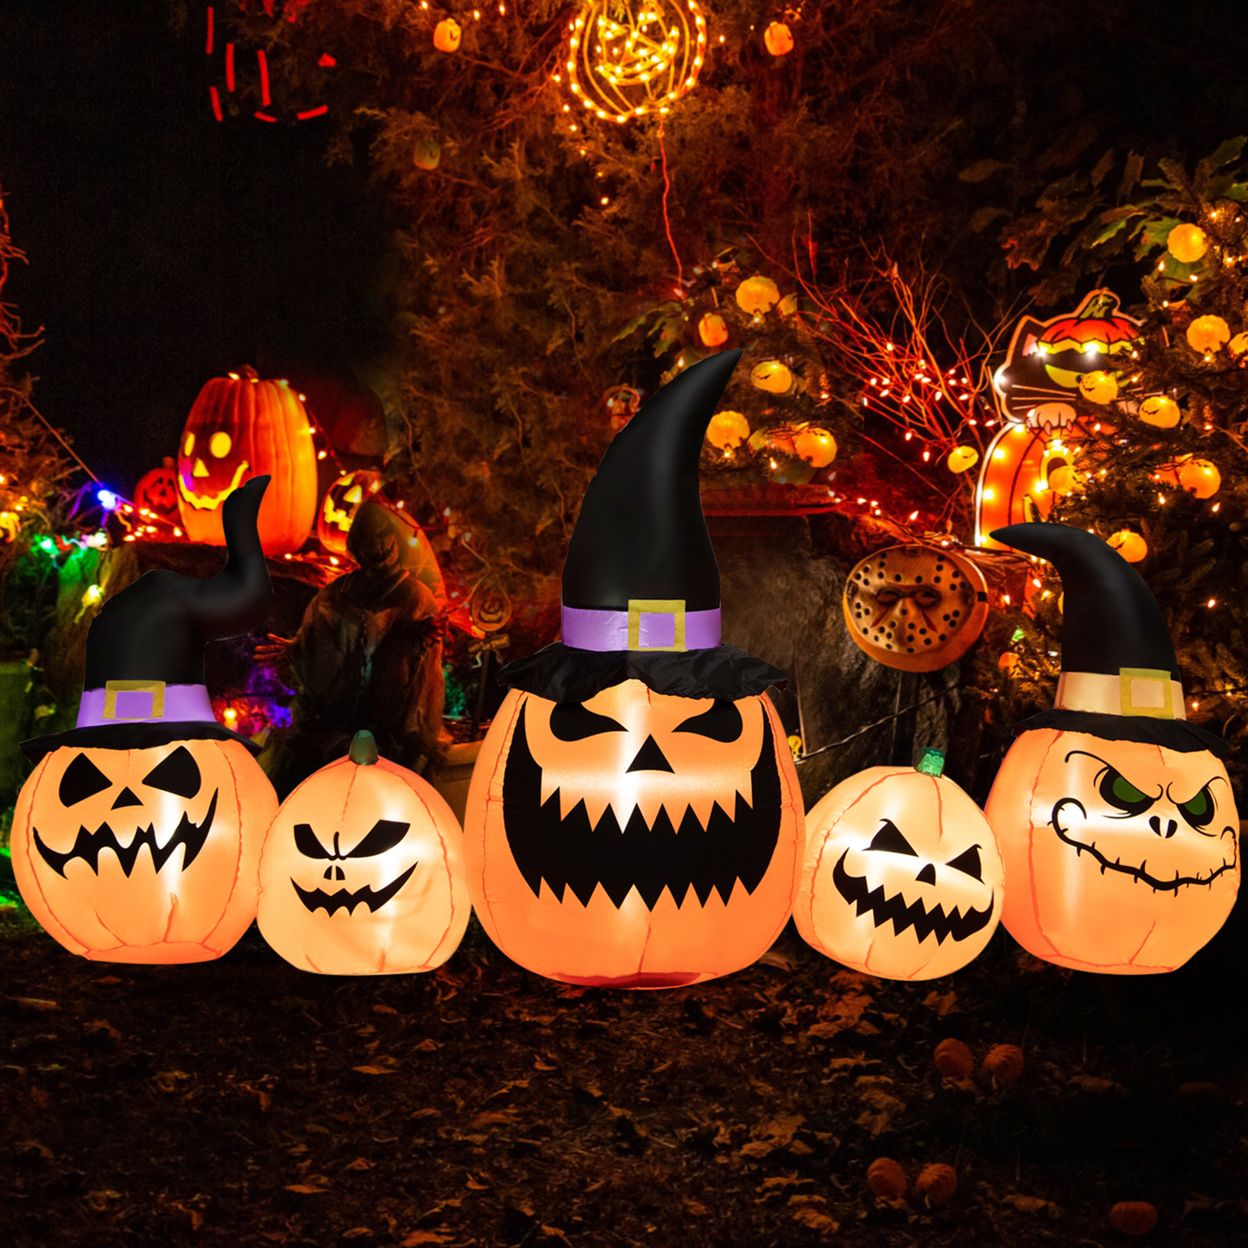 4' Inflatable Halloween Pumpkin Yard Decoration W/Built-in LED Lights